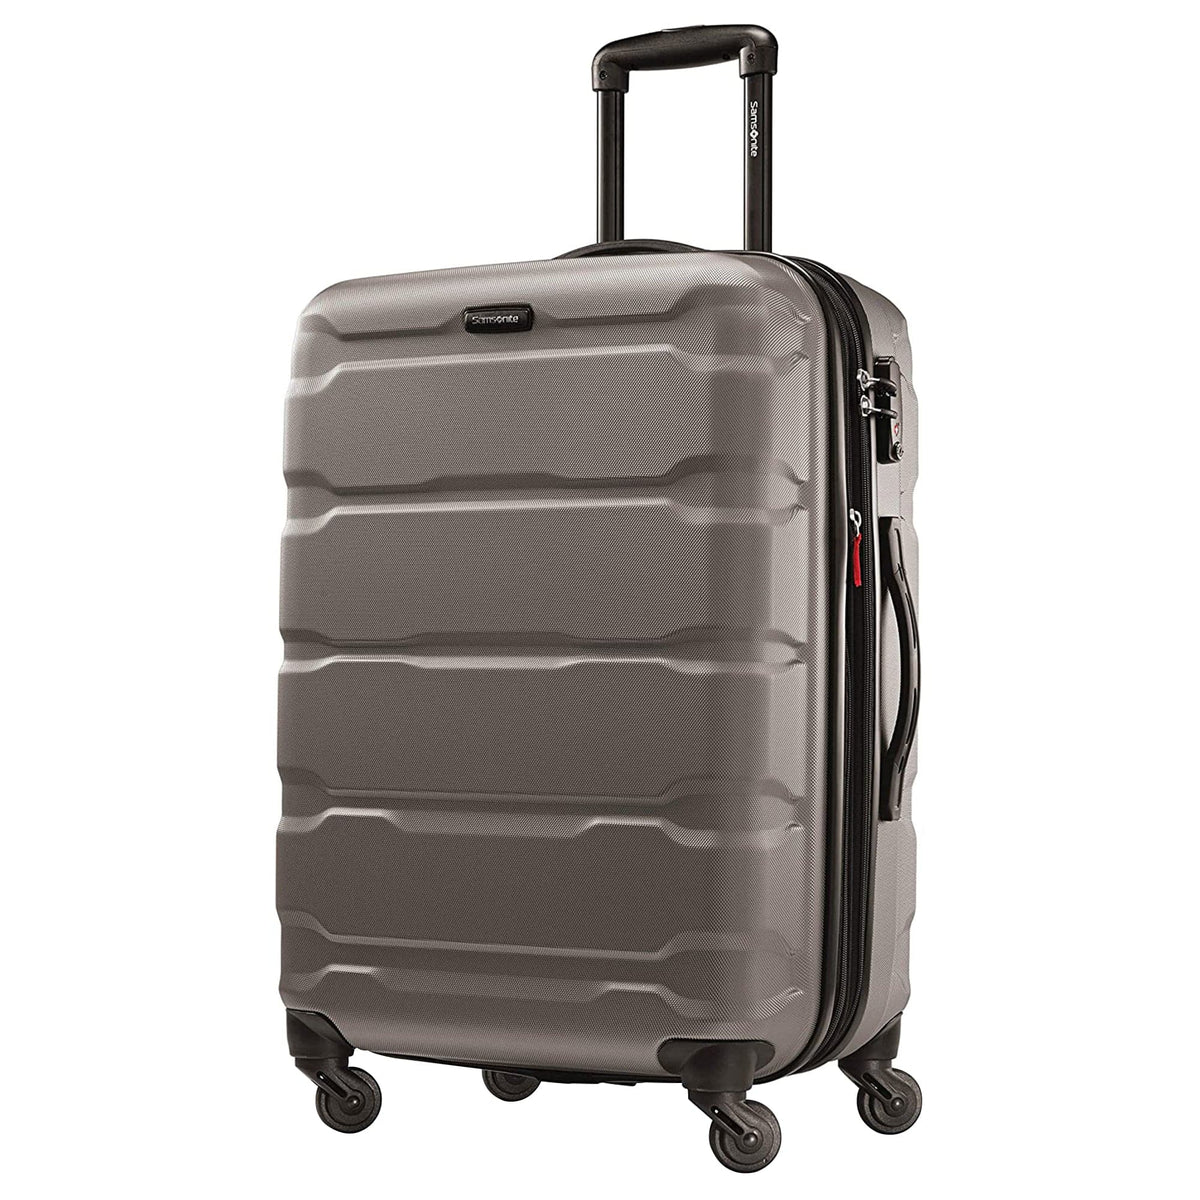 Samsonite Omni PC 24" Spinner Luggage